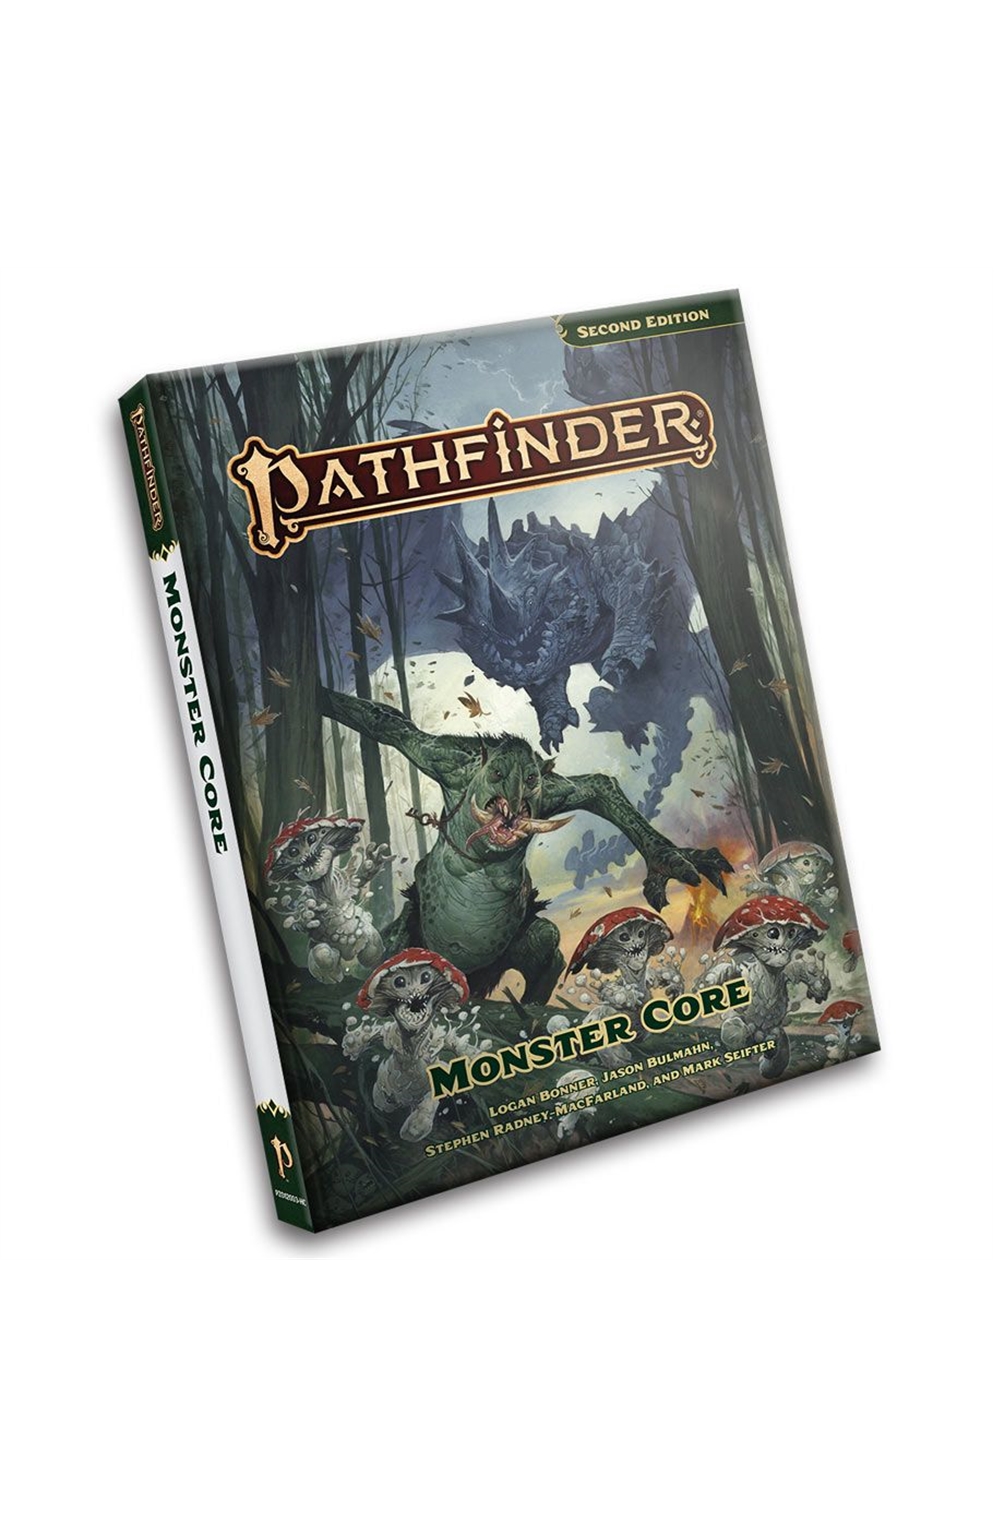 Pathfinder 2E: Pathfinder Monster Core